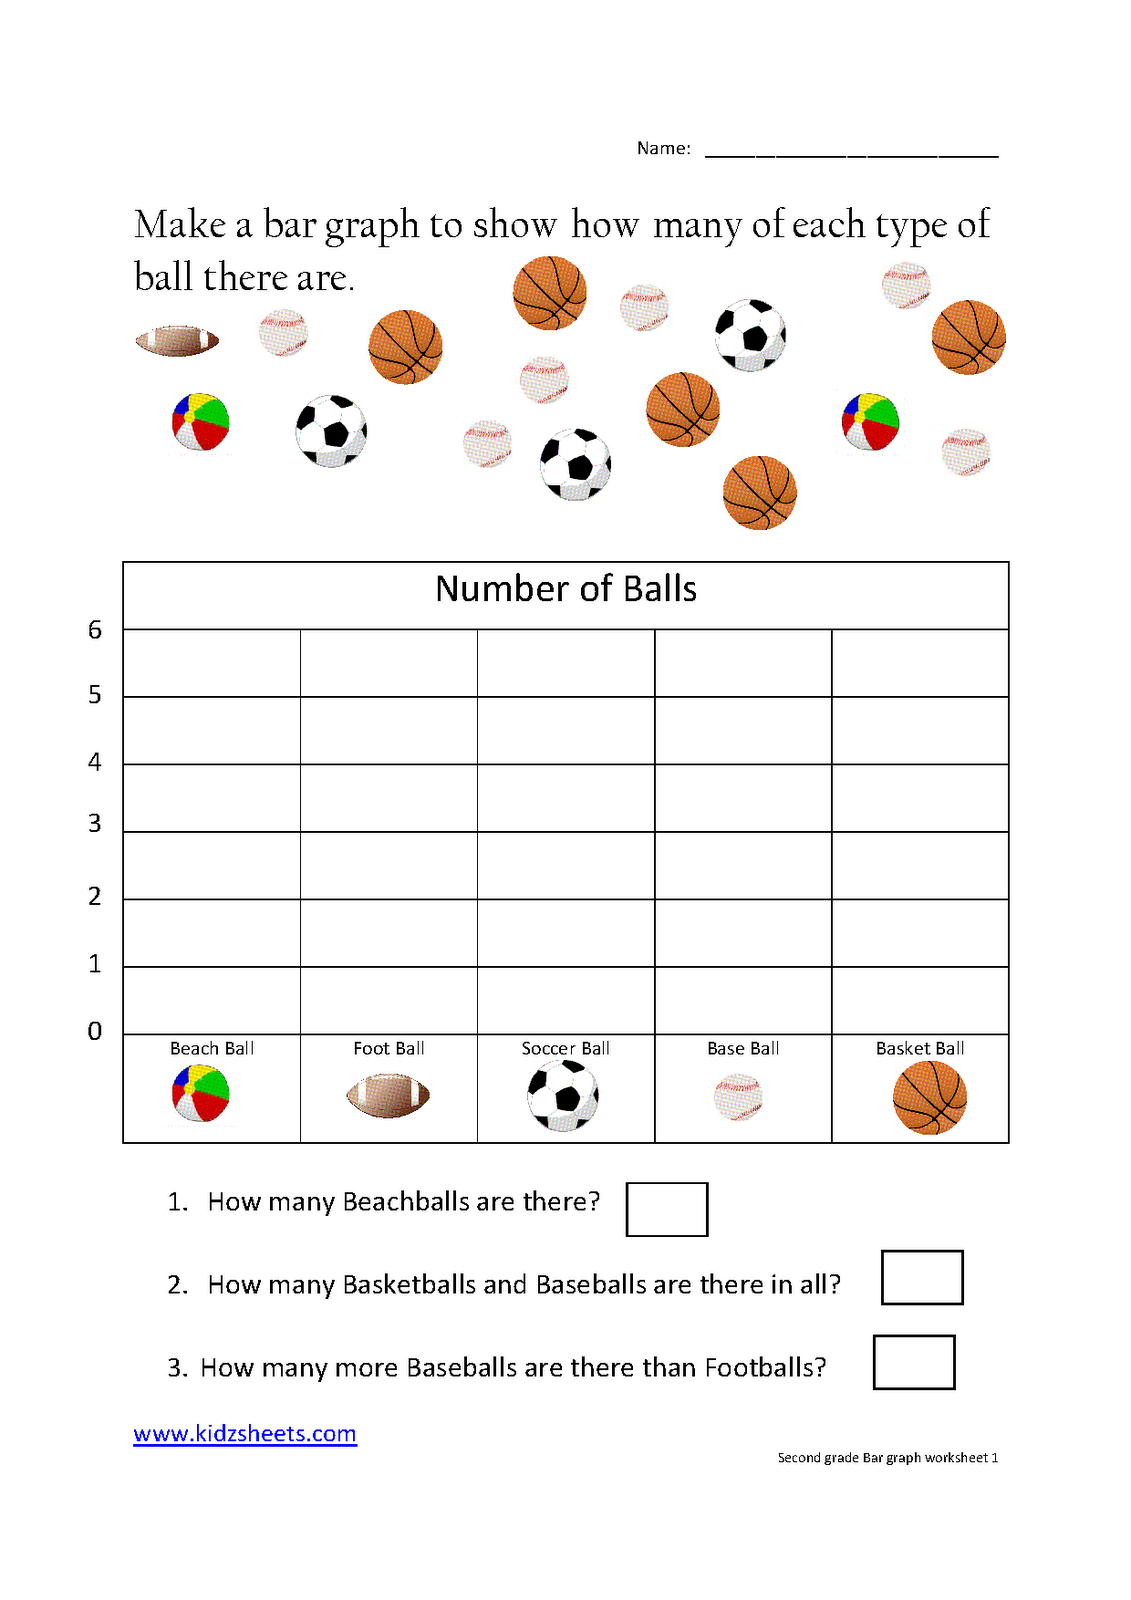 Kidz Worksheets: Second Grade Bar Graph Worksheet1 - Free Printable Bar Graph